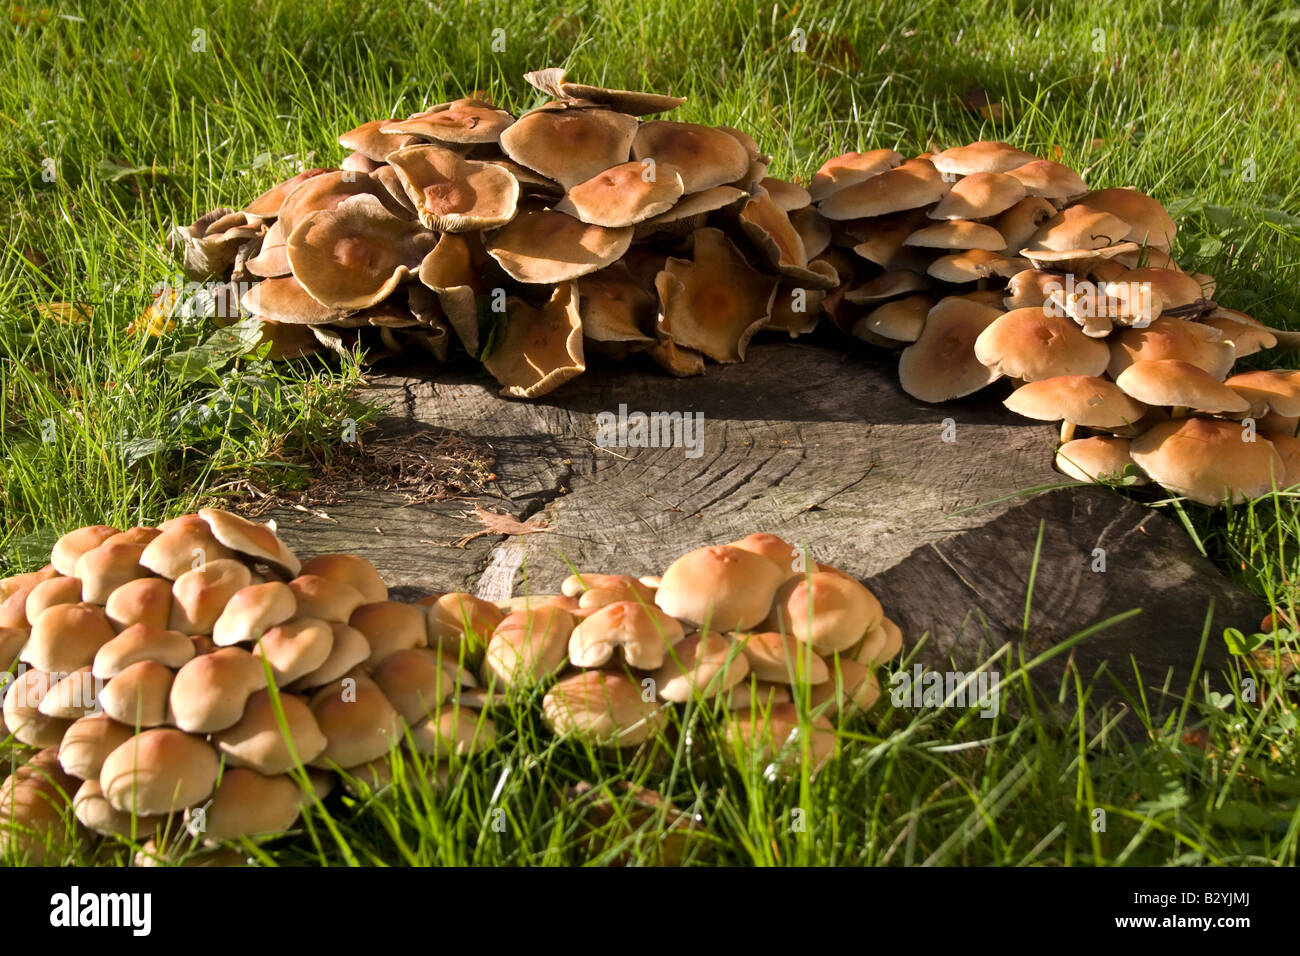 Fungus growing on an old tree stump Stock Photo